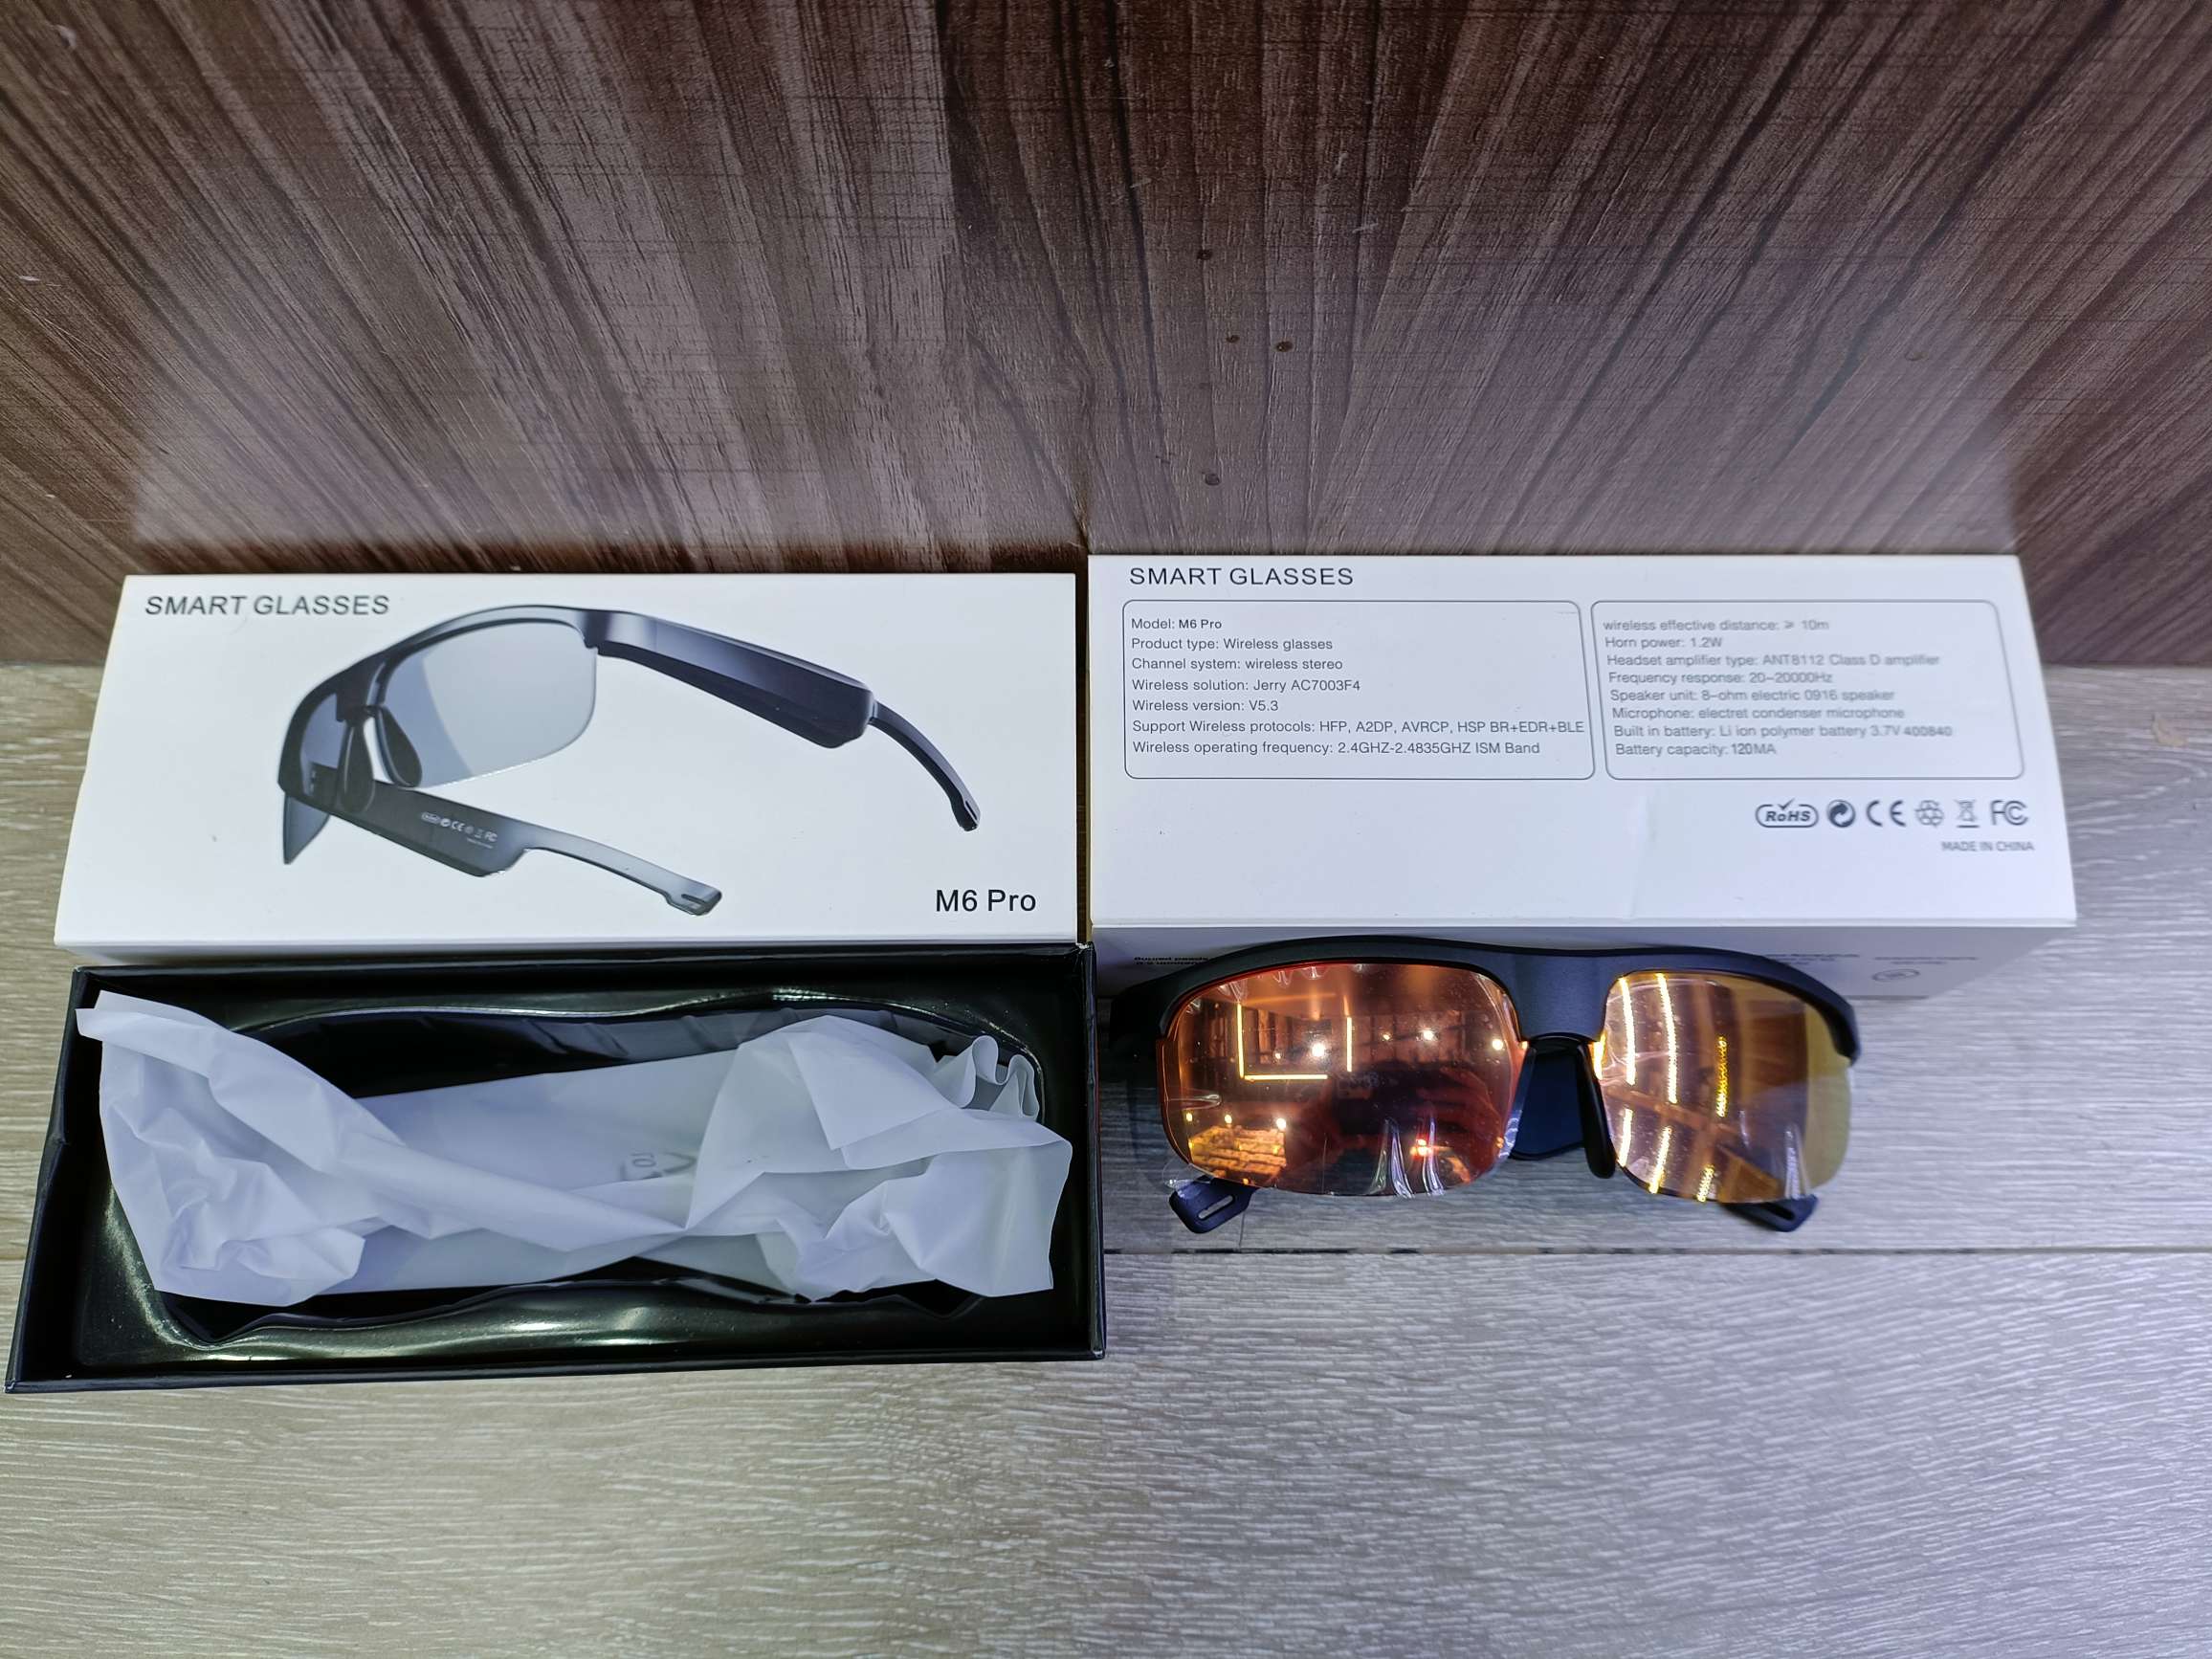 M6 Pro 智能蓝牙耳机眼镜 集电话音乐眼镜于一体 防紫外线详情图3